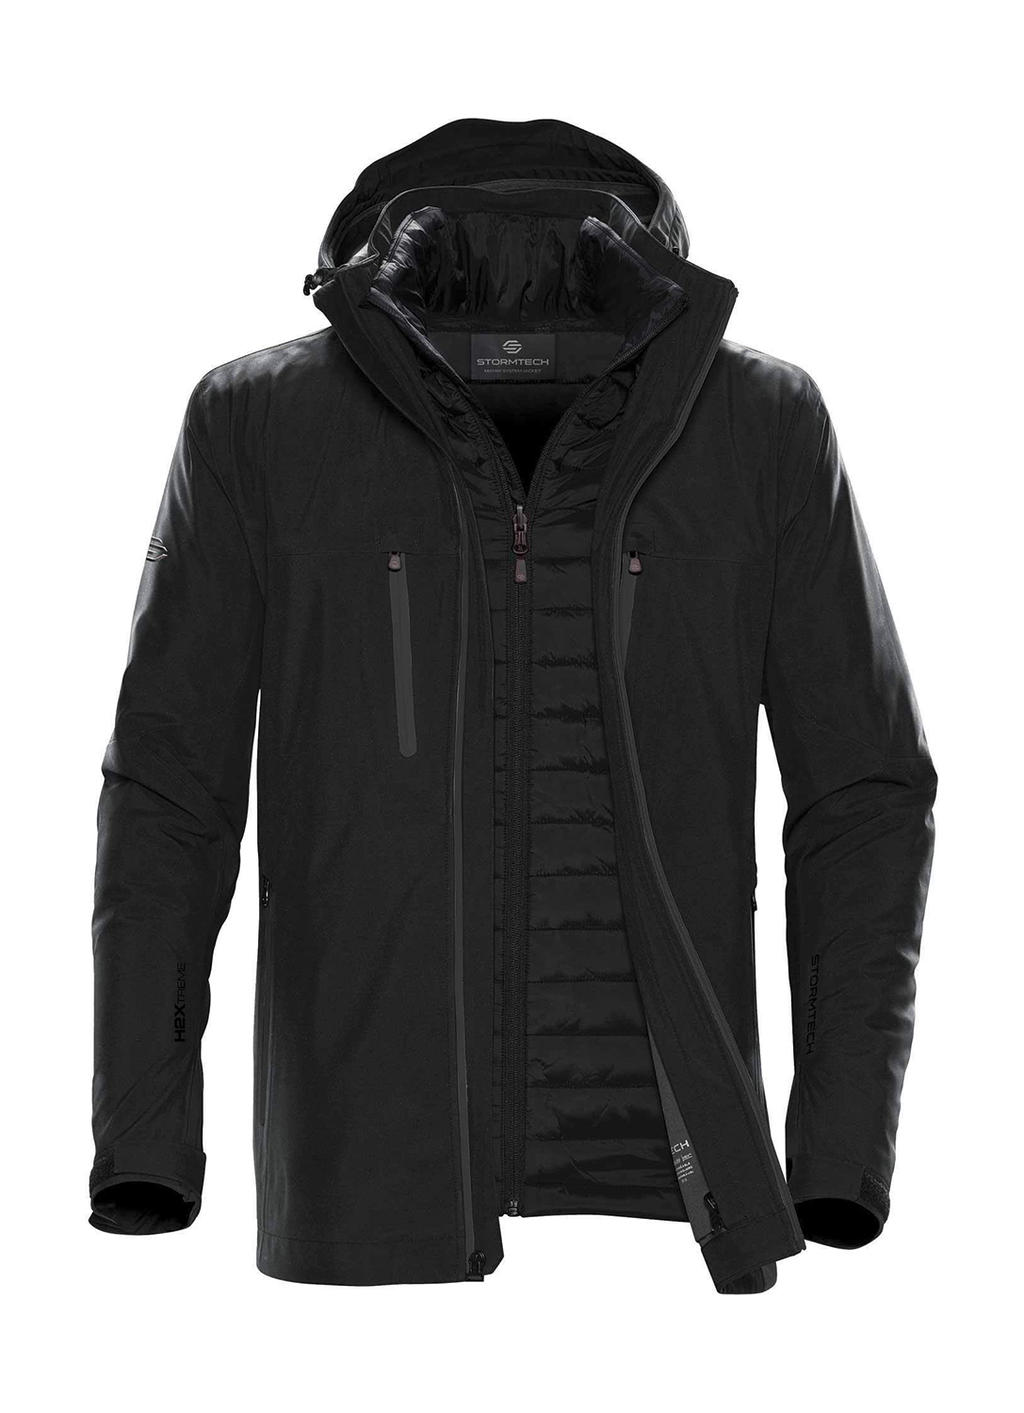  Mens Matrix System Jacket in Farbe Black/Carbon